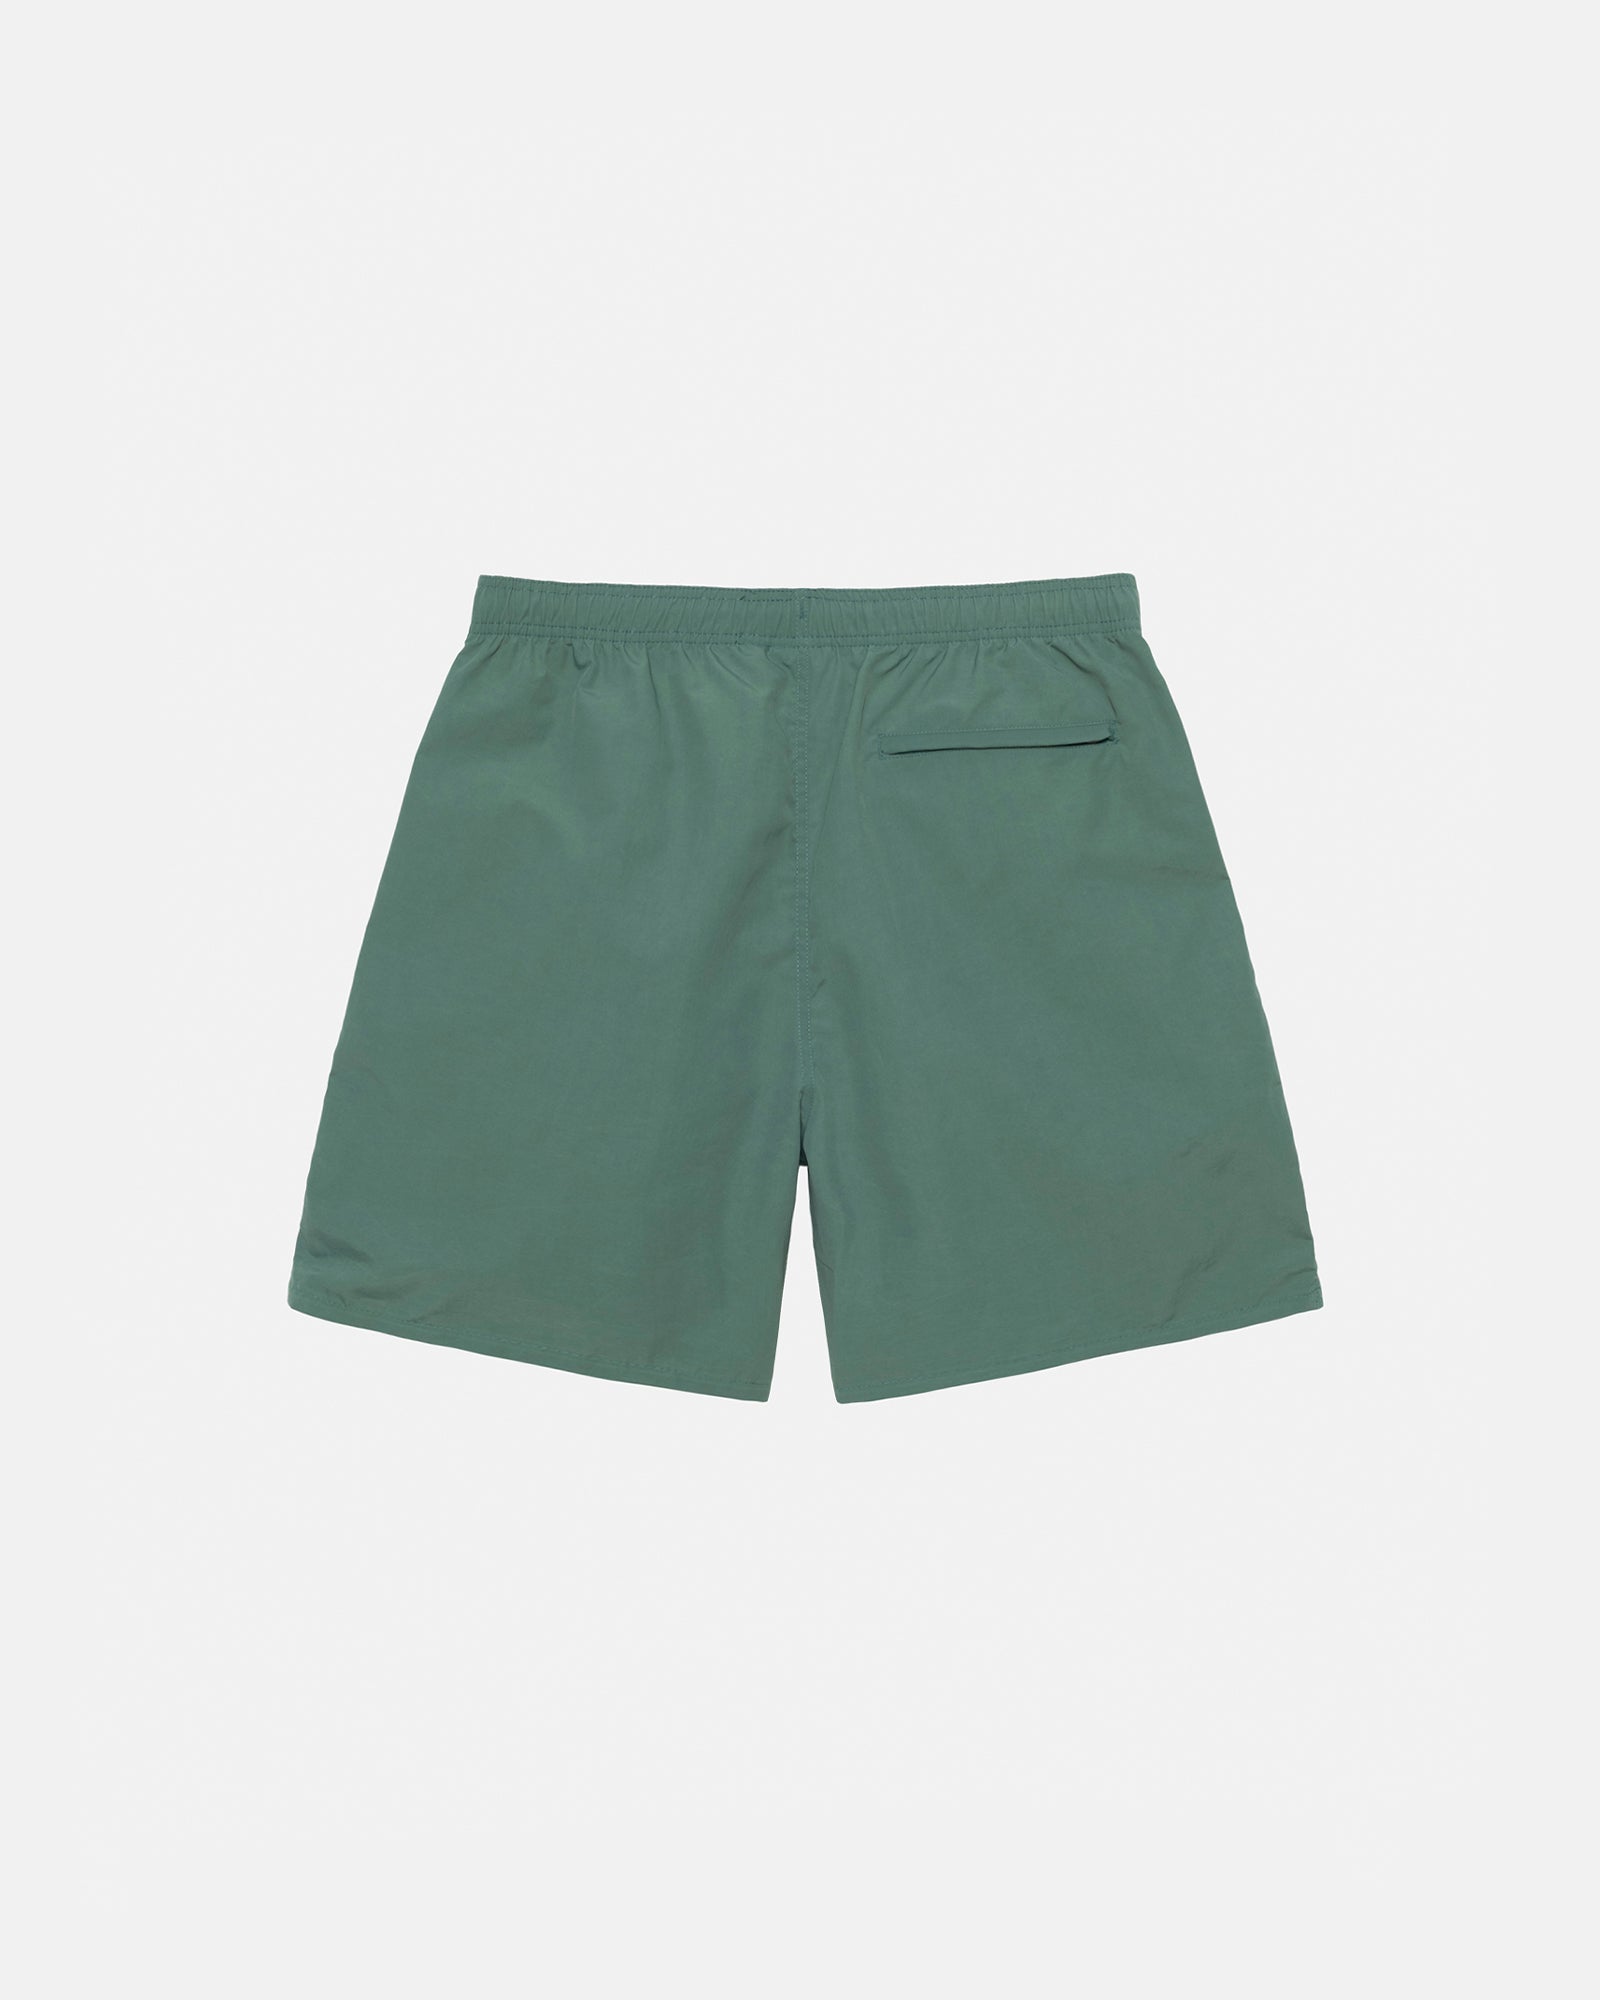 Stüssy Water Short Stock Emerald Shorts